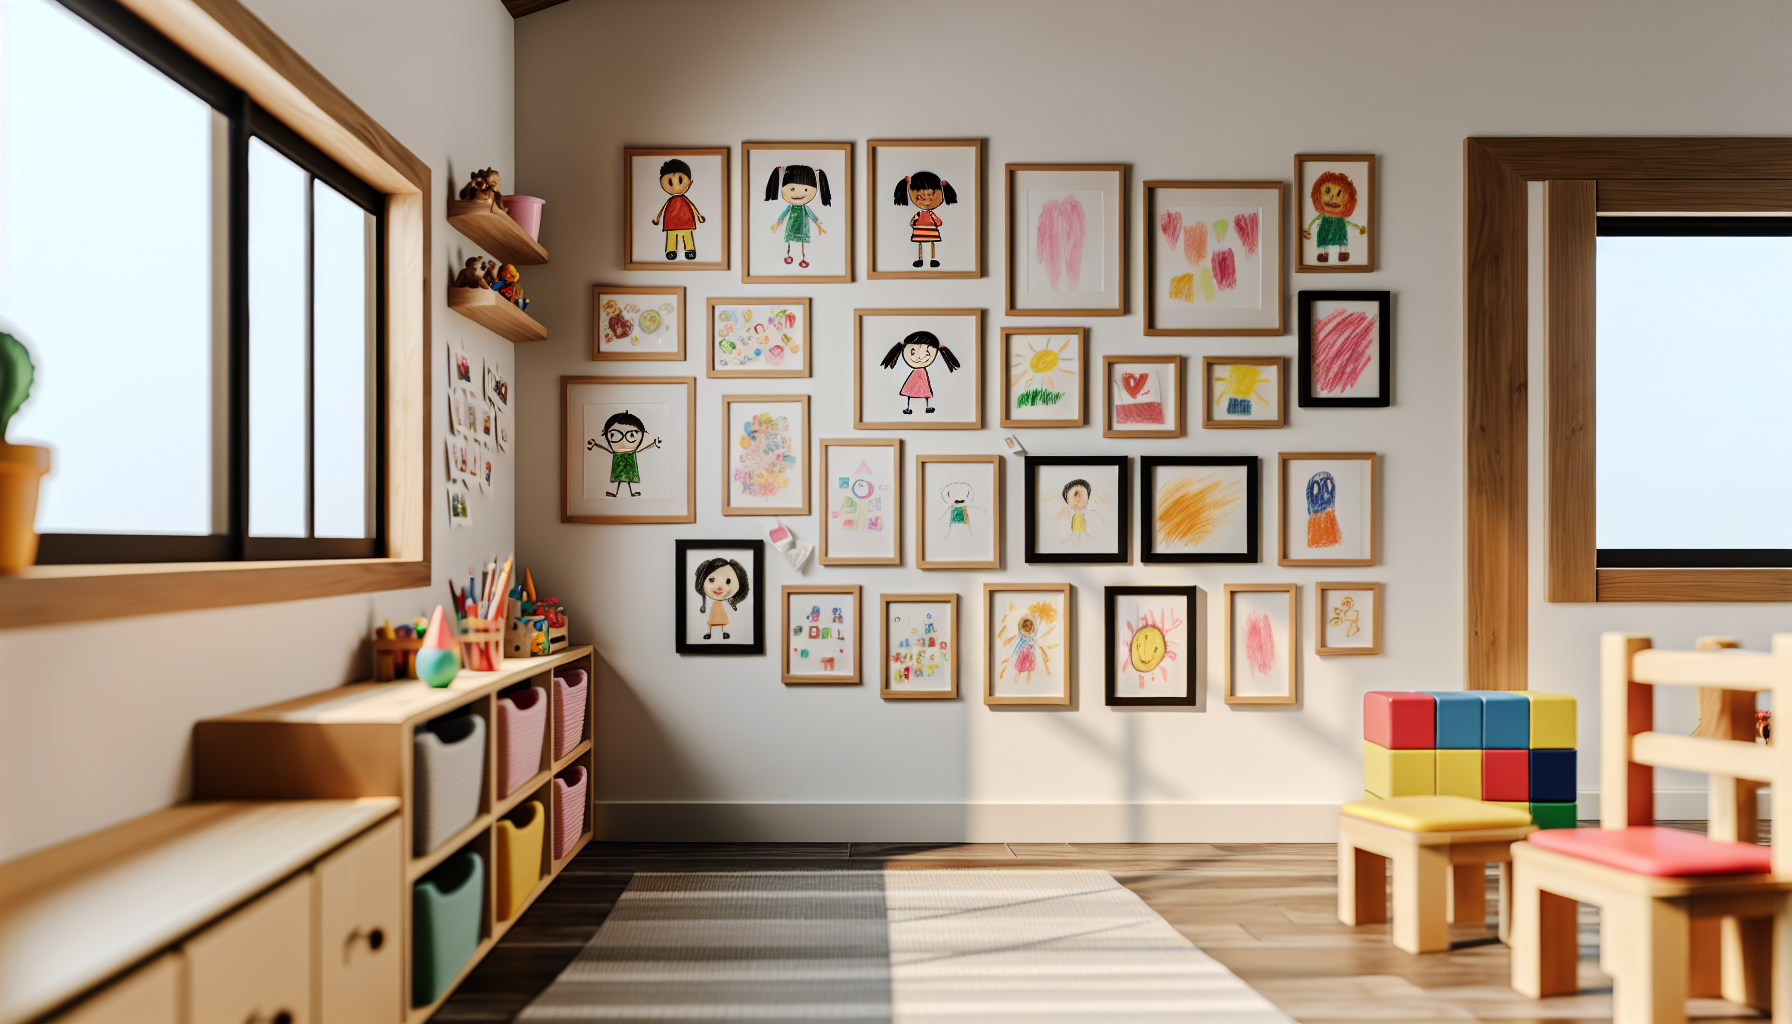 Children's artwork displayed on the walls